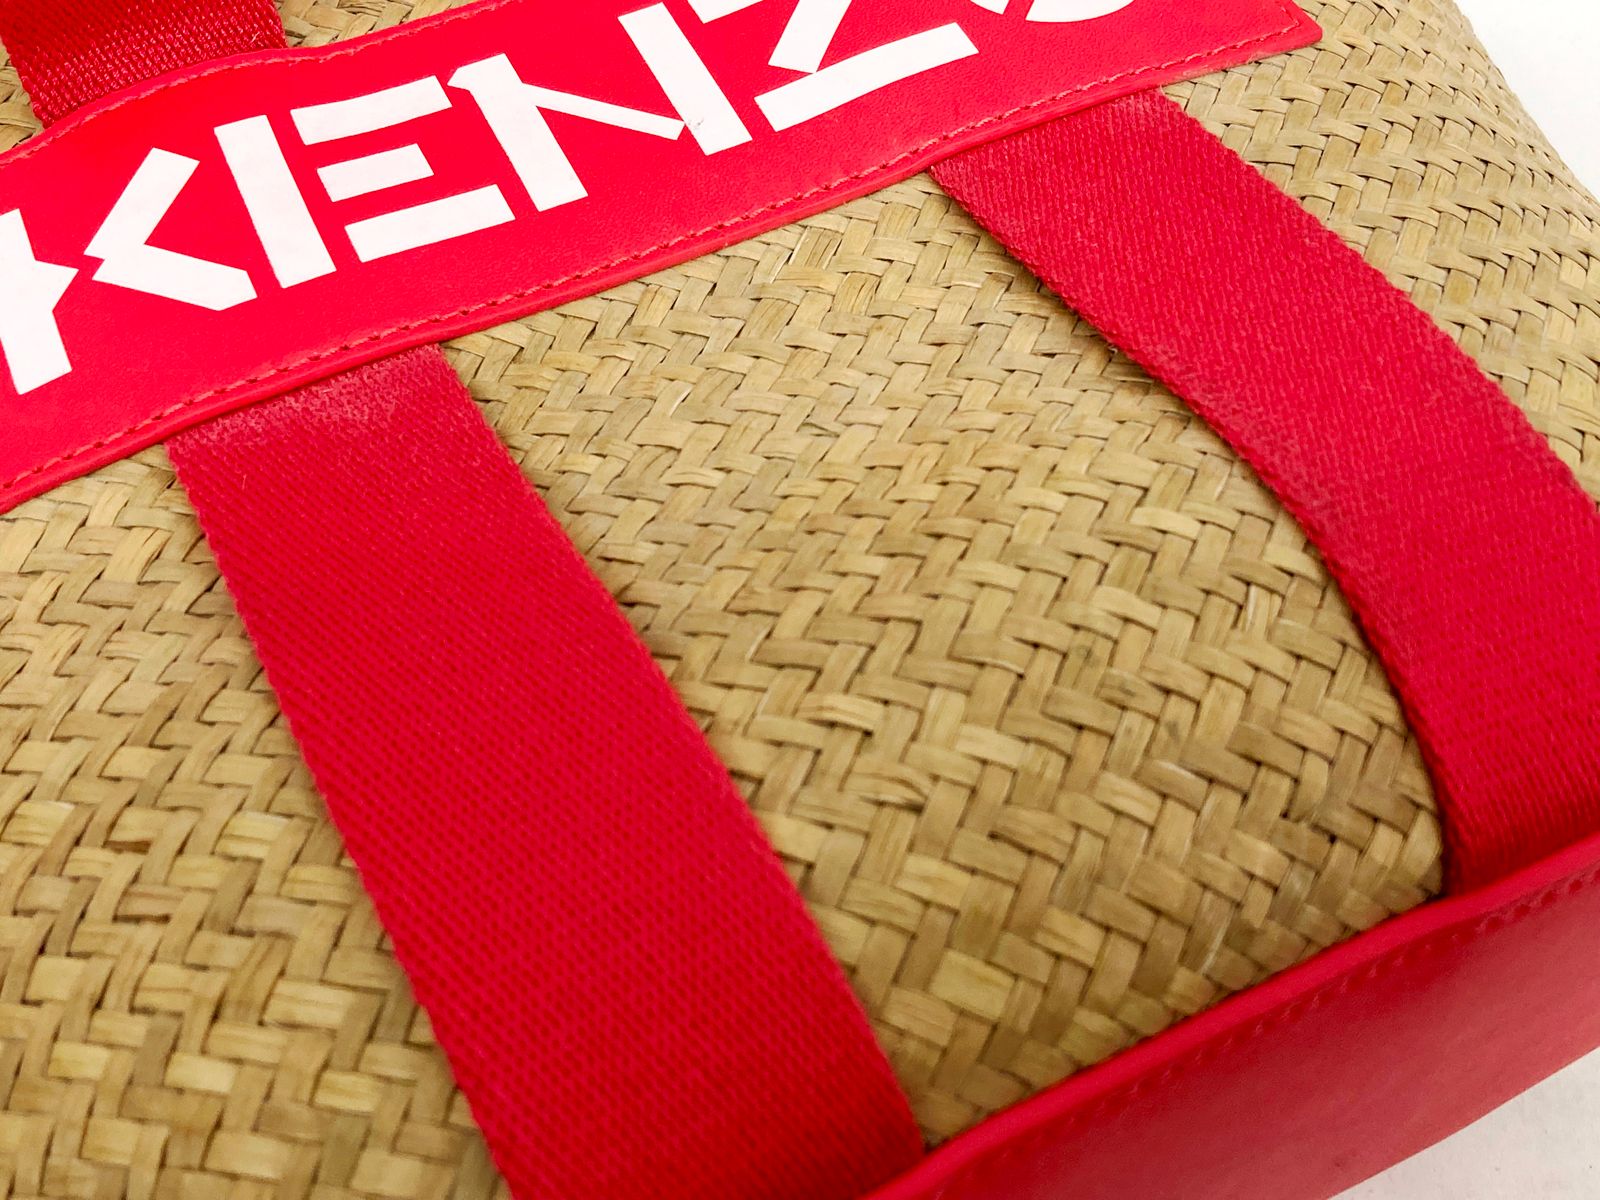 KENZO (ケンゾー) ロゴ スモールラフィア かごバッグ ショルダーバッグ